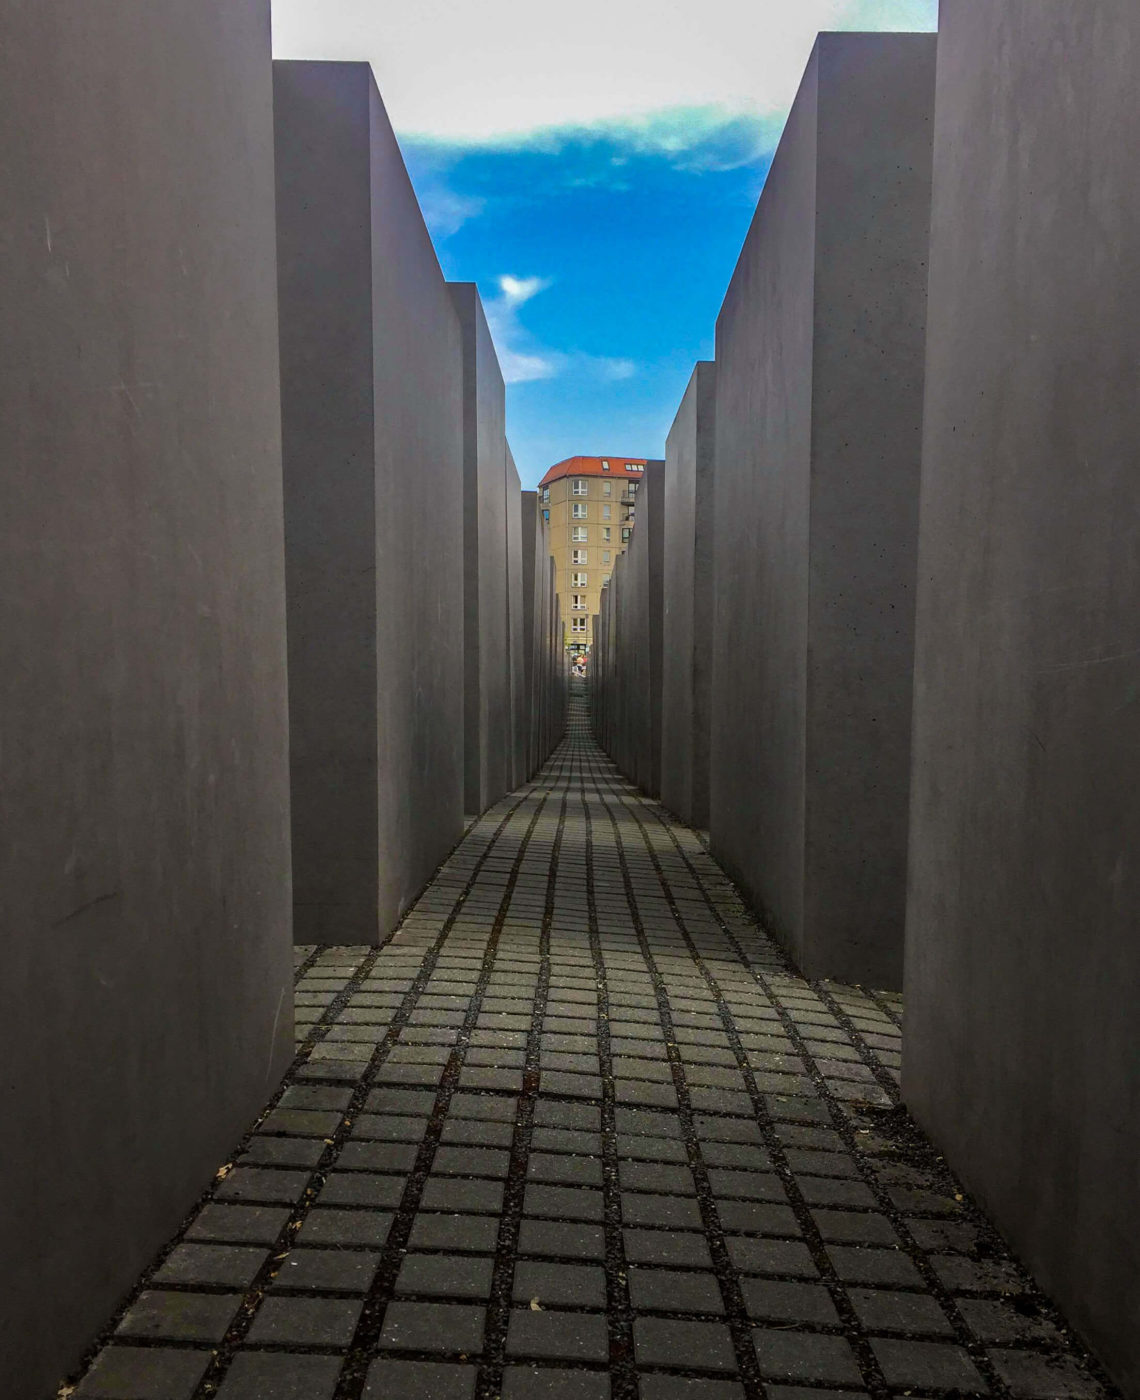 The Holocaust Memorial of Berlin